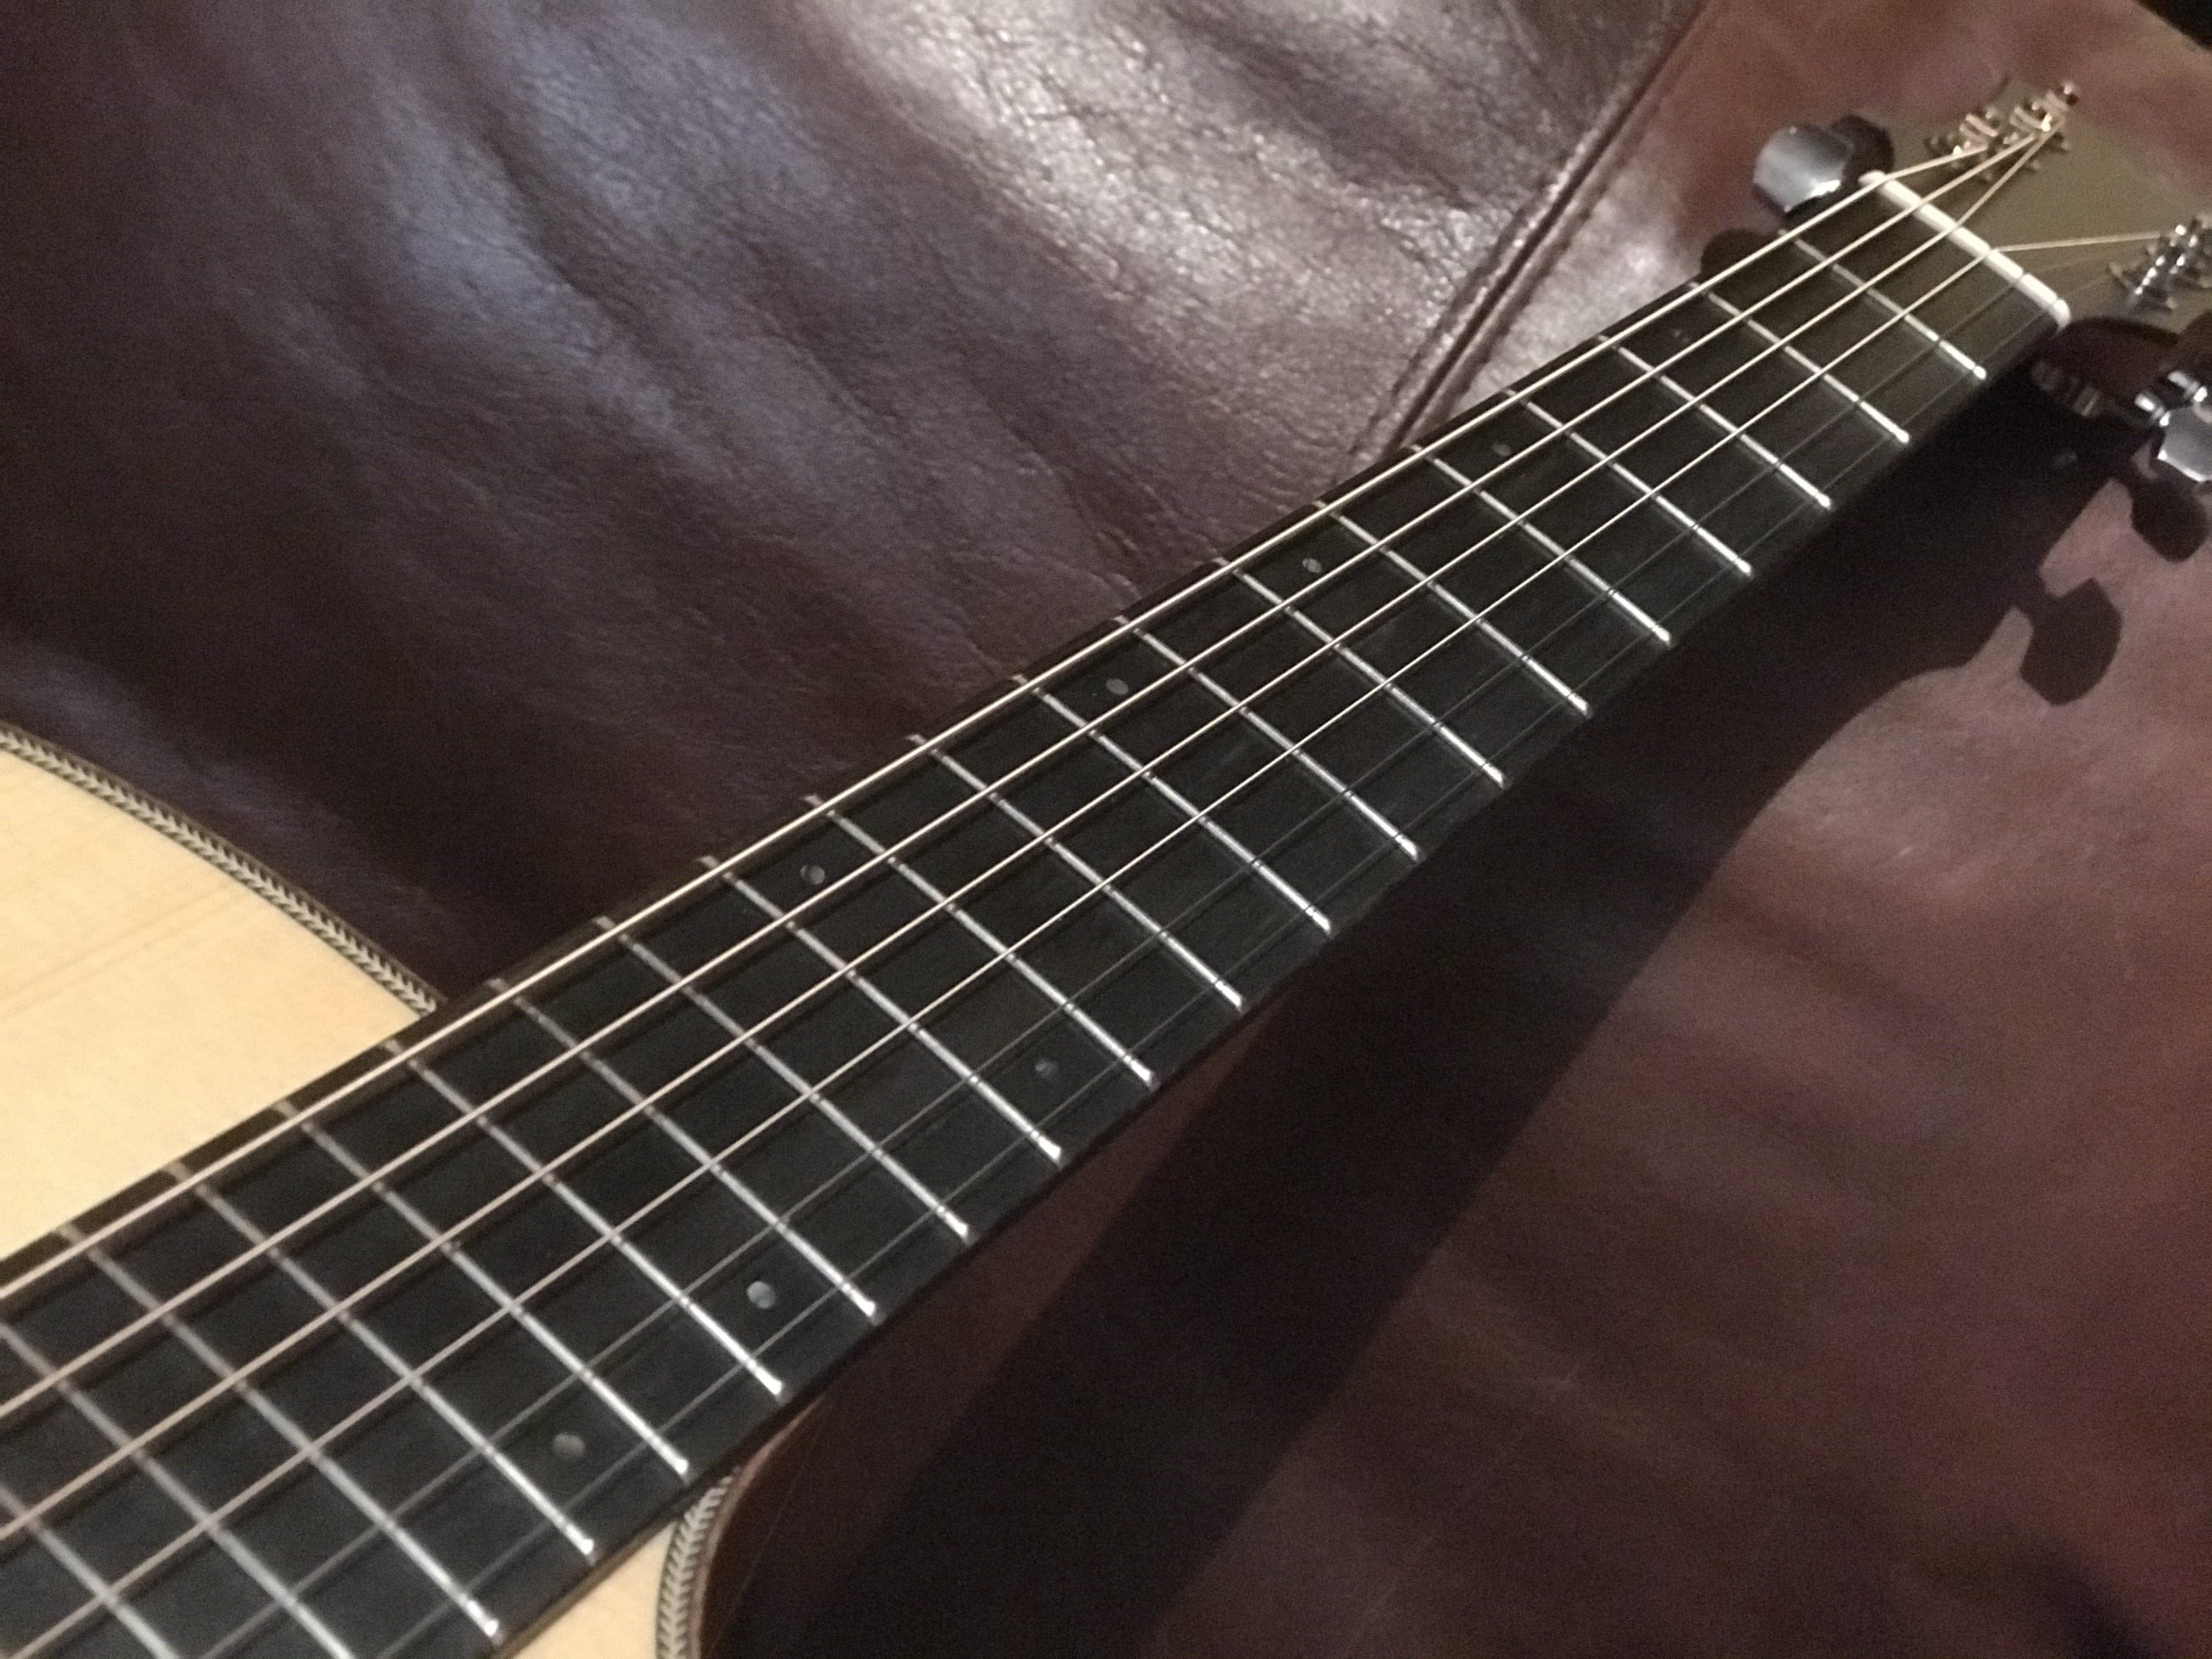 Dowina Mahogany (Pomona) GAC SWS, Acoustic Guitar for sale at Richards Guitars.